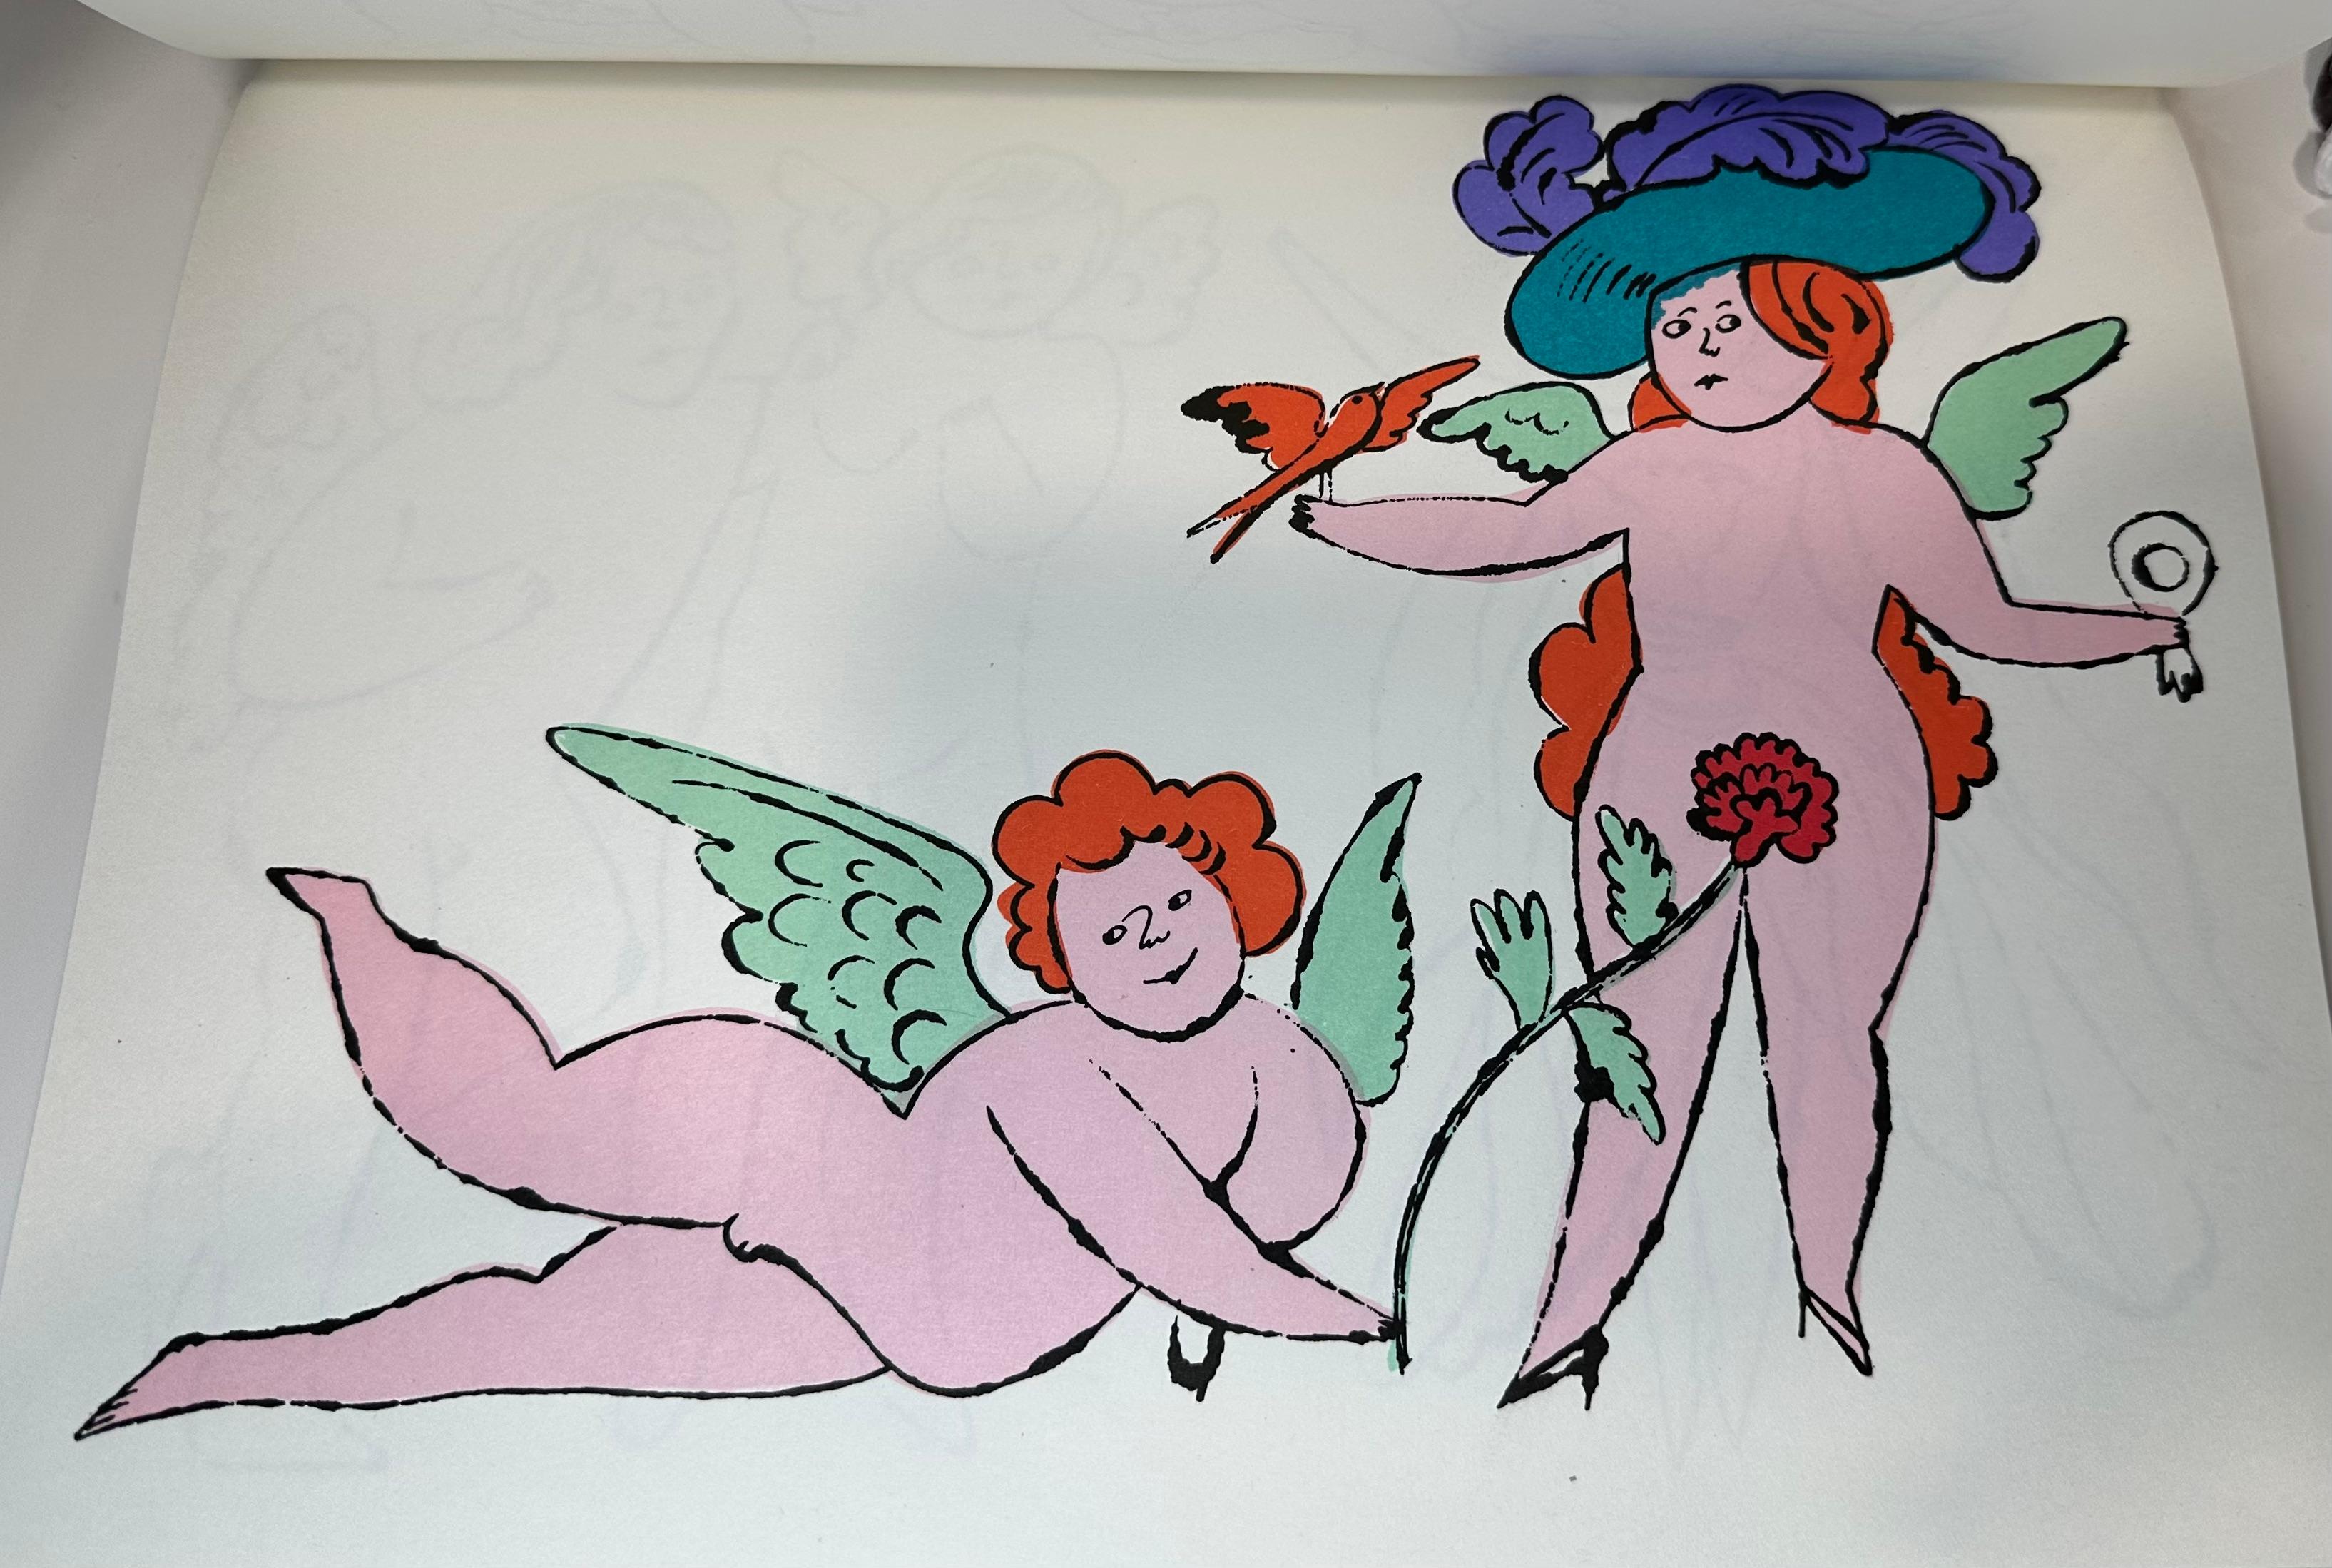 andy warhol children's book illustrations